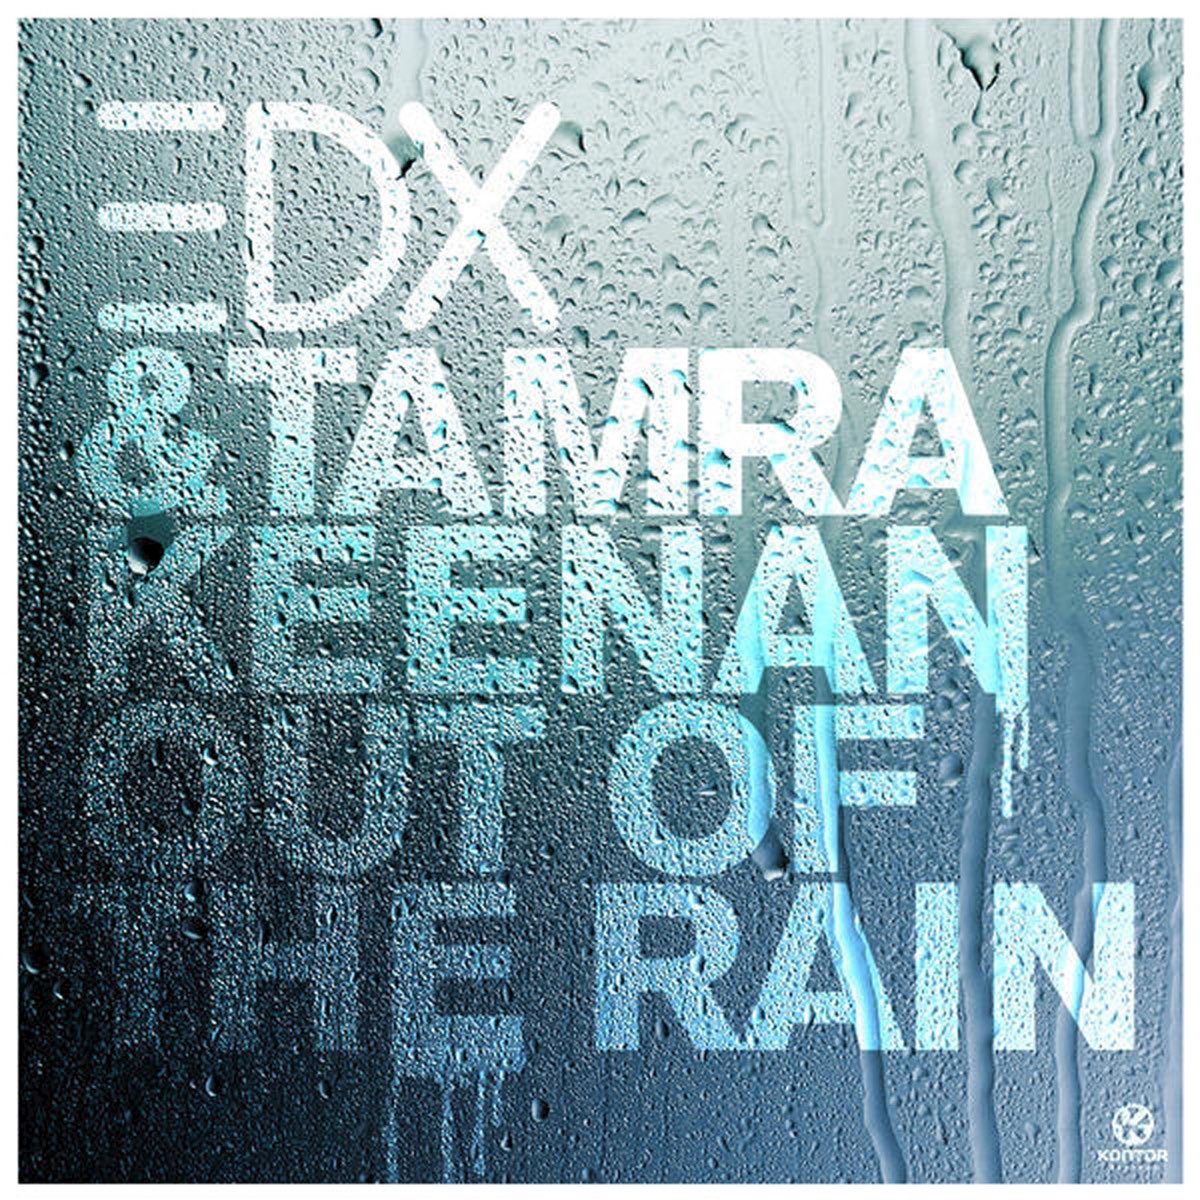 The Rain Remix. Rain out. EDX & Tamra Keenan - out of the Rain (Sebastian Krieg Remix). The Rain (feat. Greenspree).